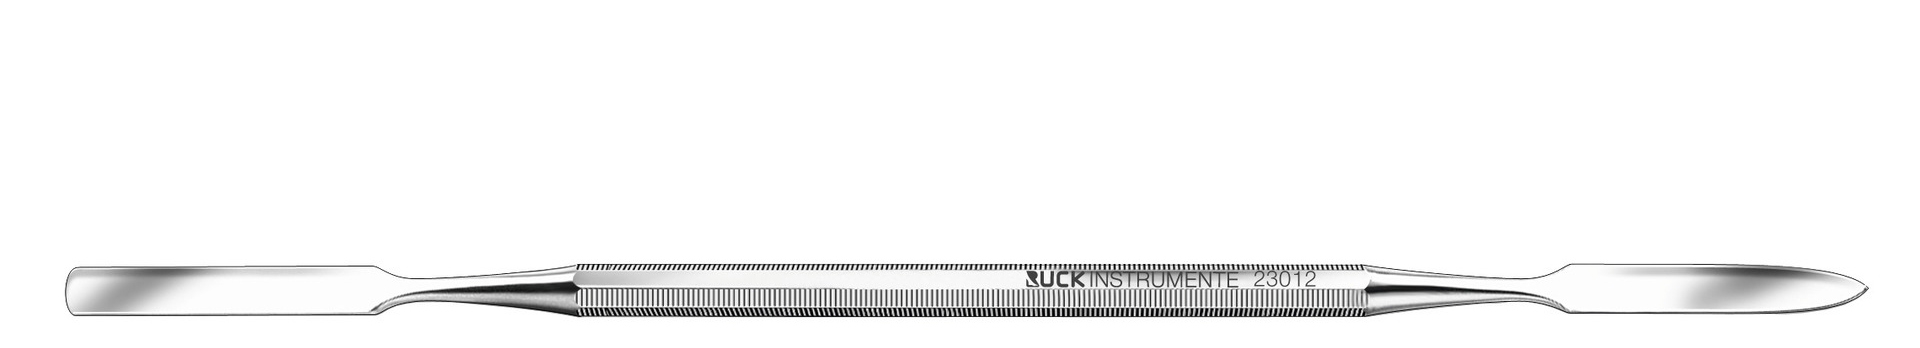 RUCK INSTRUMENTE Doppelendiger Spatel | L 18 cm (Staffelpreis)